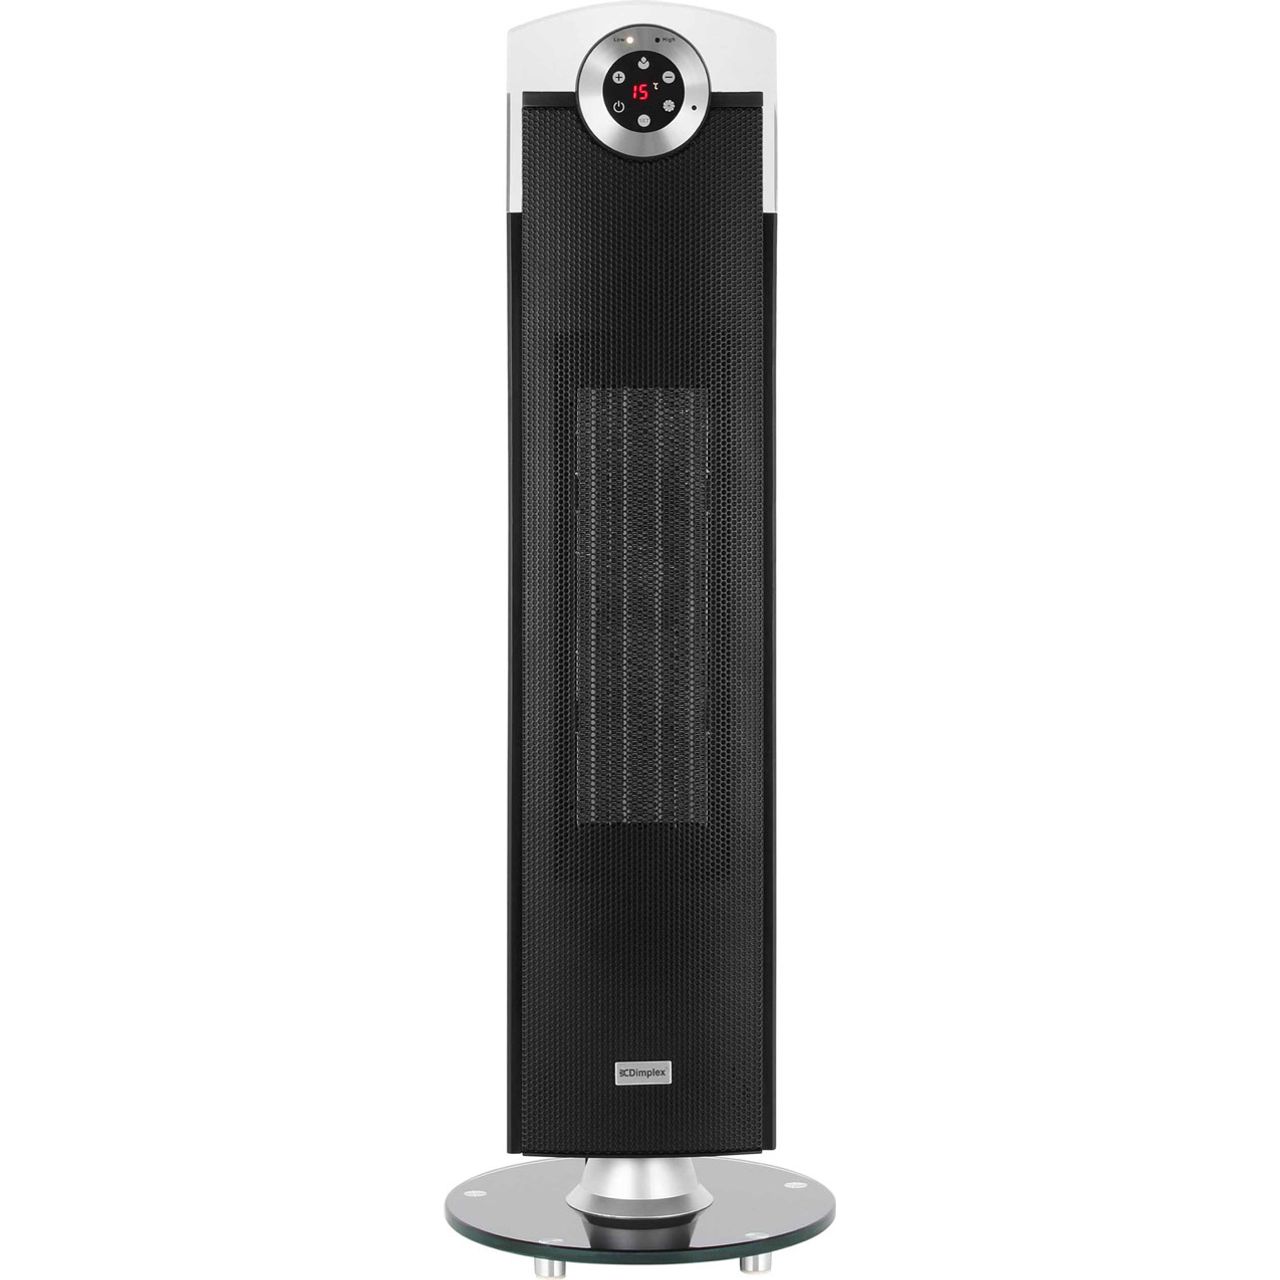 Dimplex Studio G DXSTG25 Ceramic Fan Heater With Remote Control 2500W Review